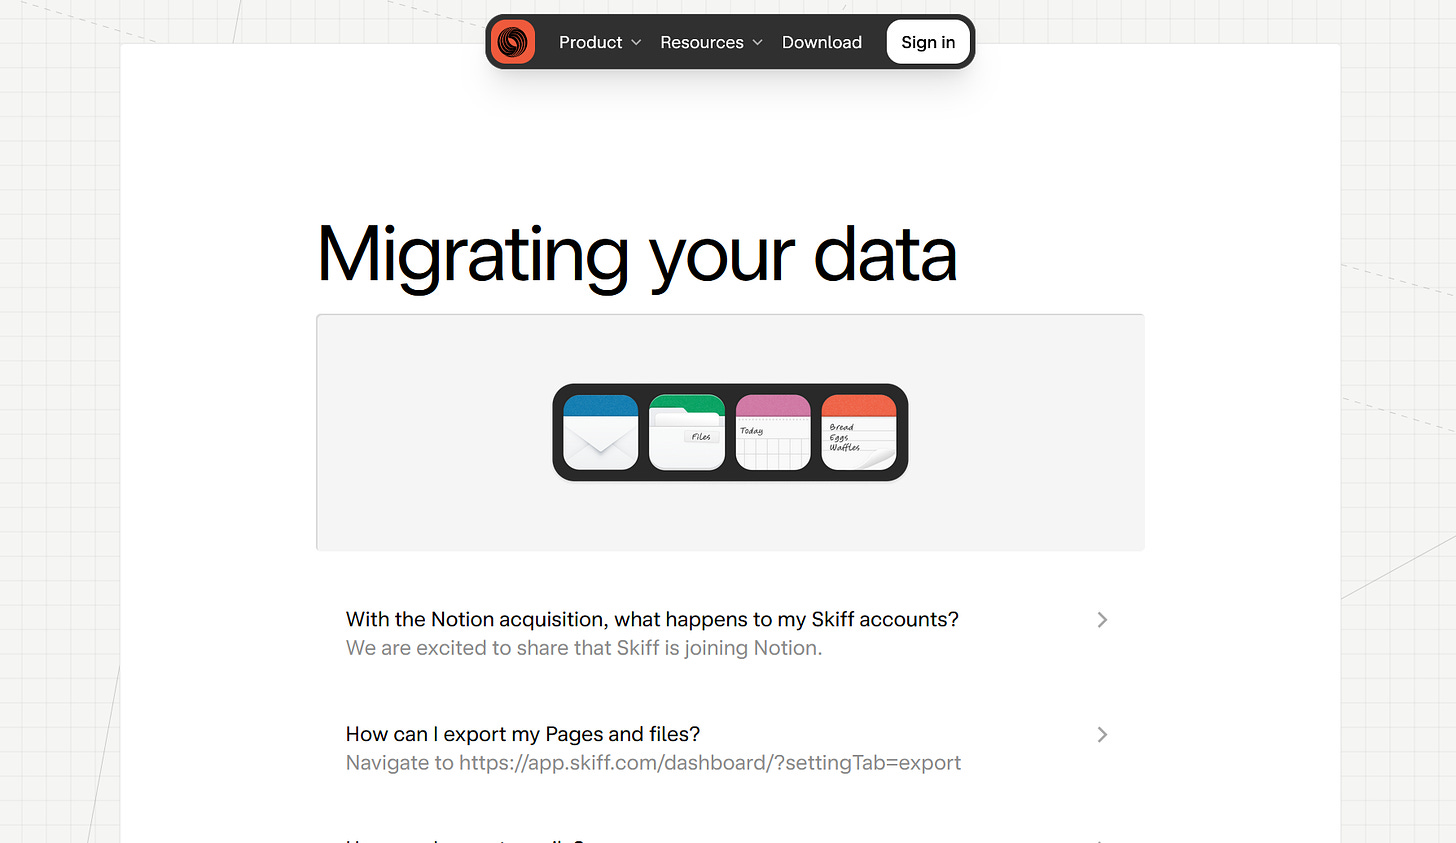 Skiff migrate your data